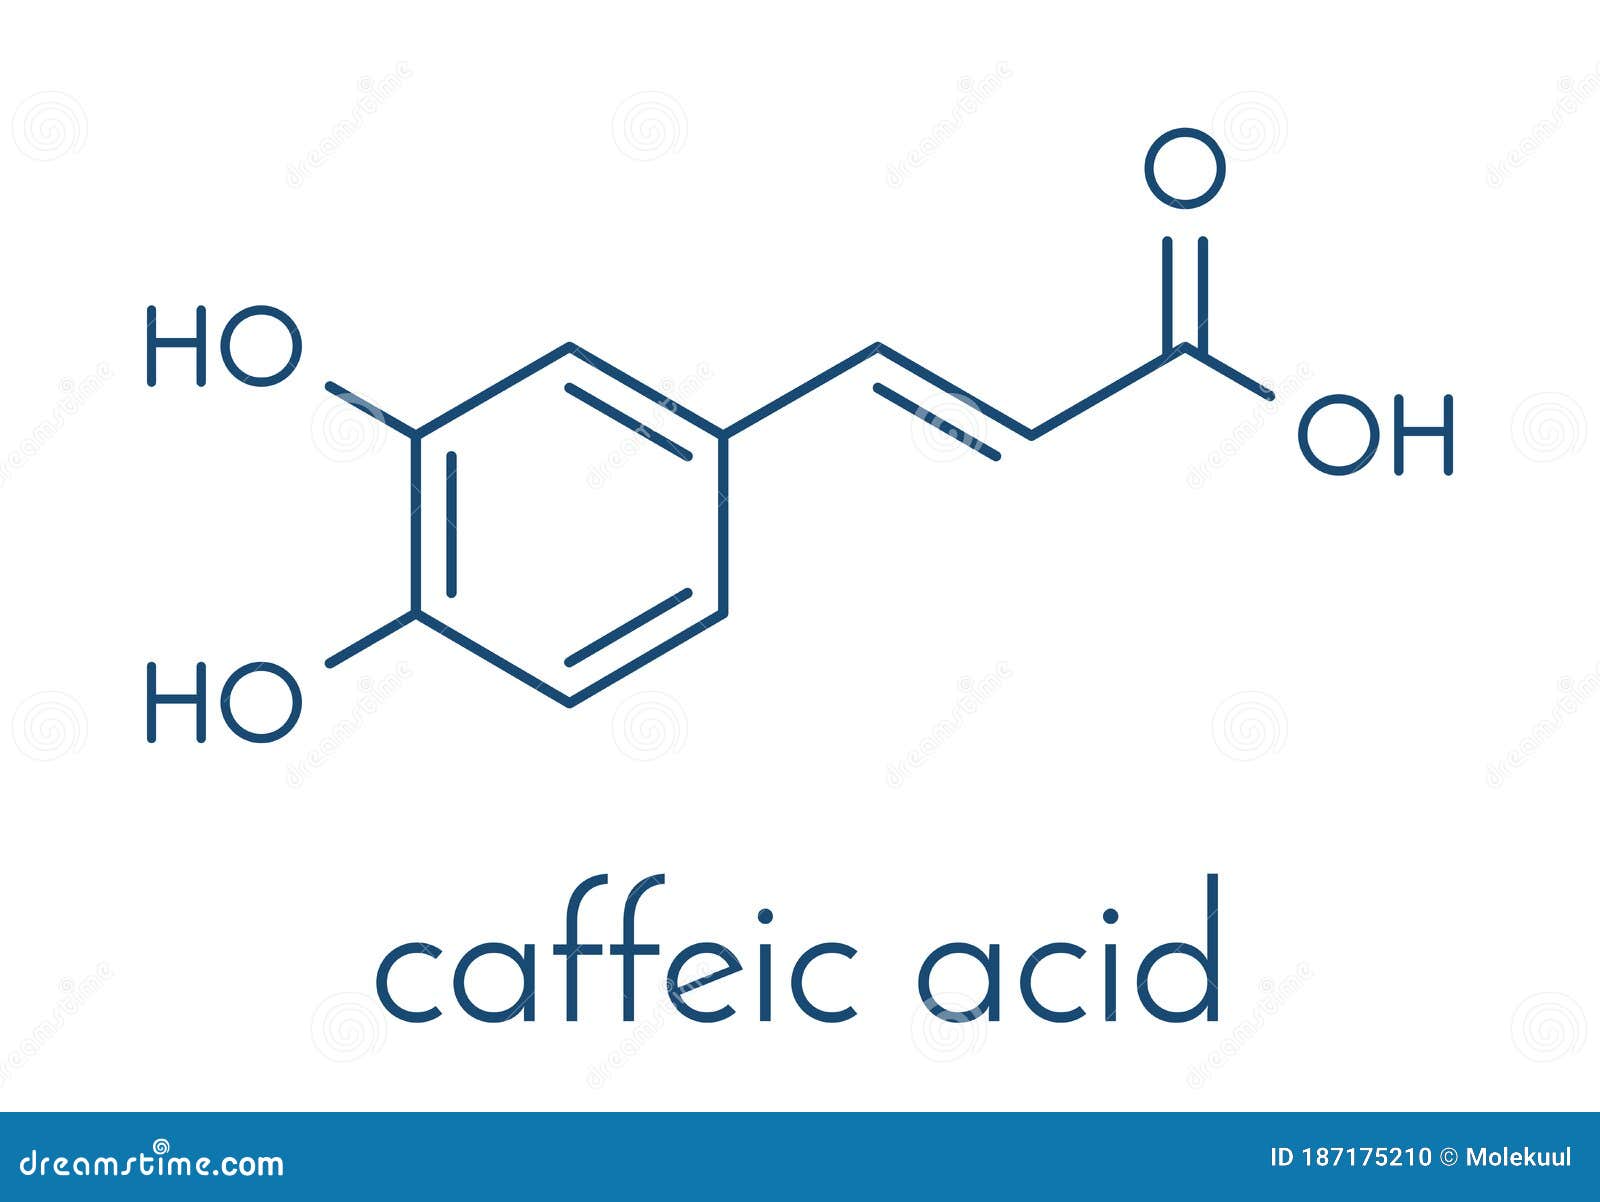 caffeic acid molecule. intermediate in the biosynthesis of lignin. skeletal formula.